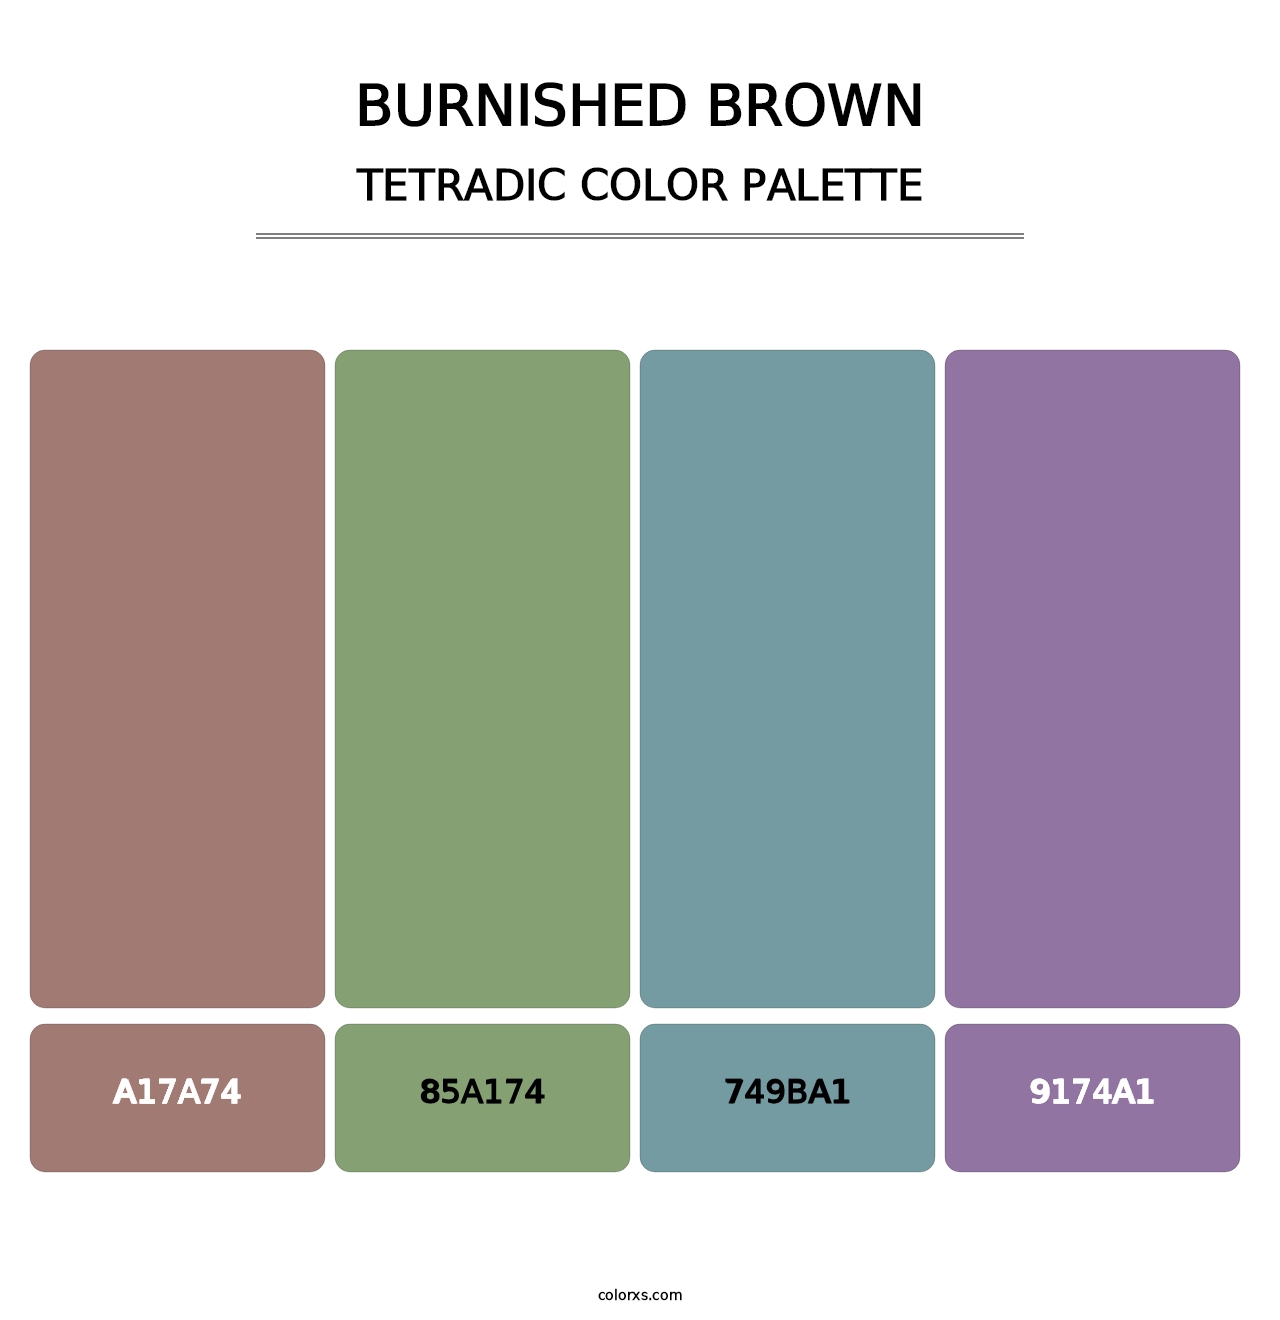 Burnished Brown - Tetradic Color Palette